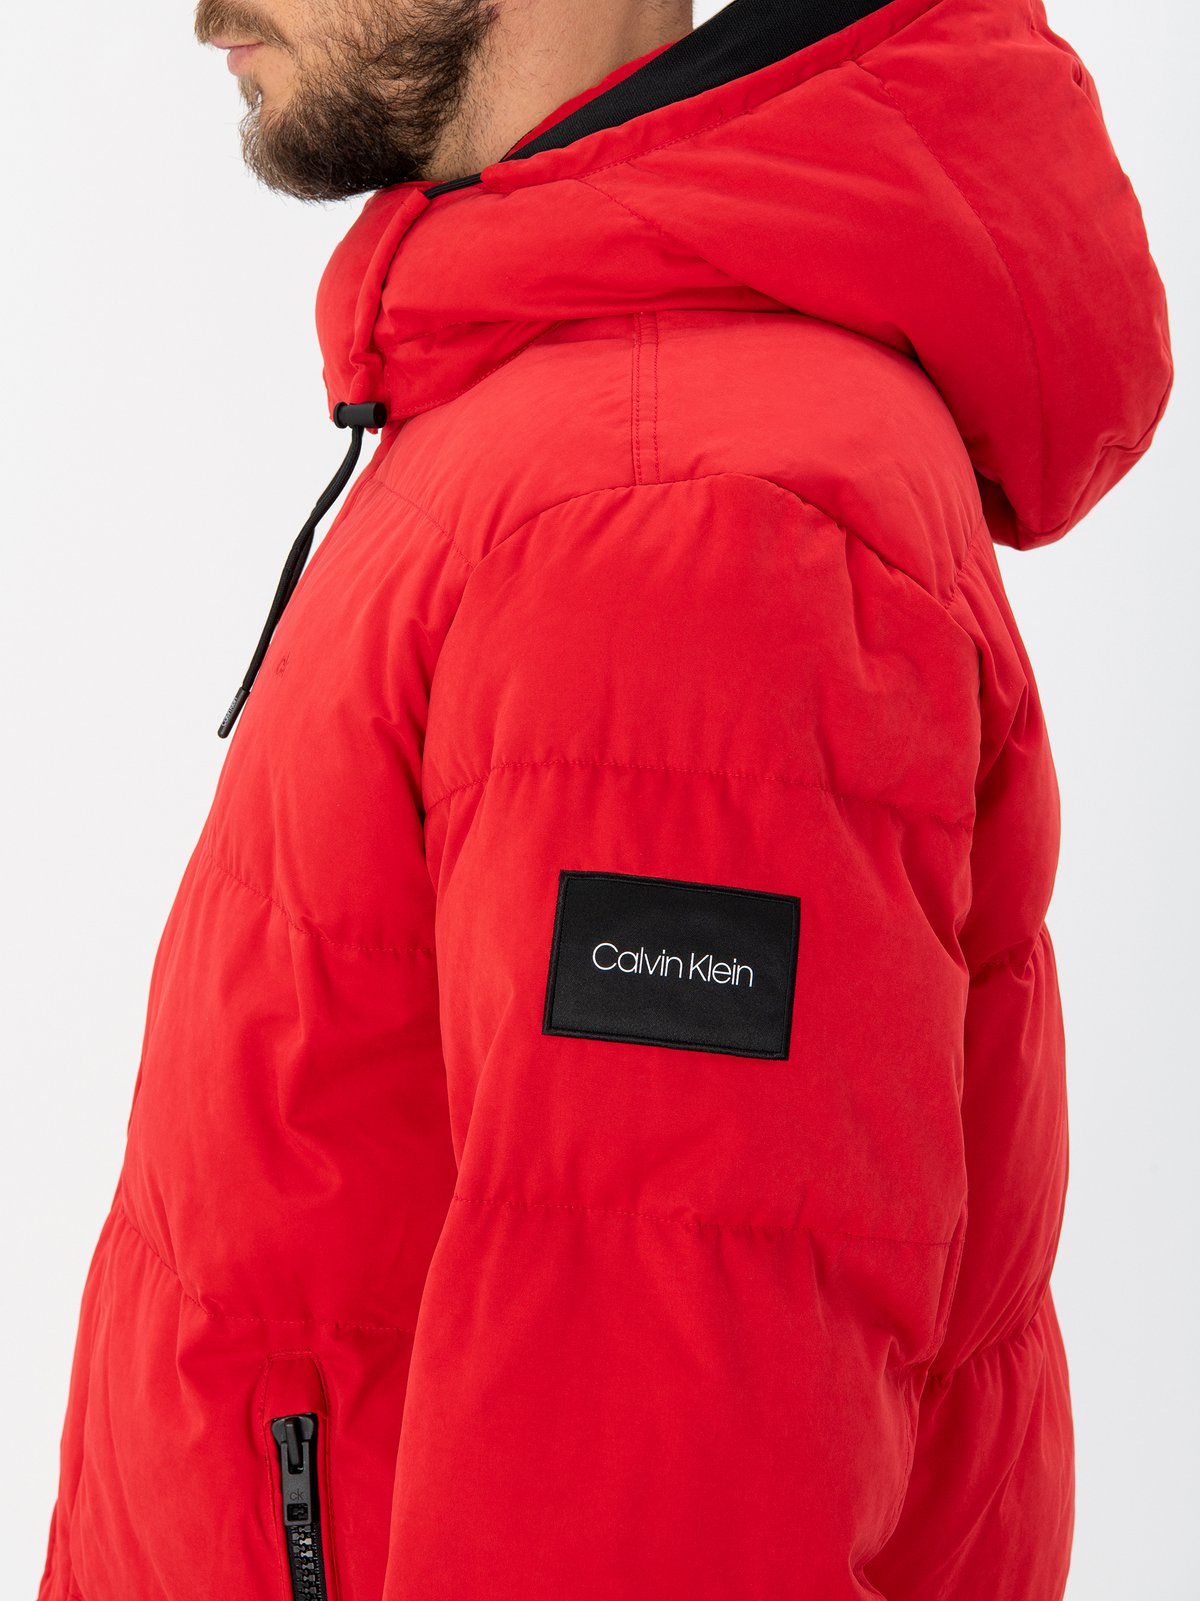 Costco] Calvin Klein Jacket Mens @59.99 - RedFlagDeals.com Forums